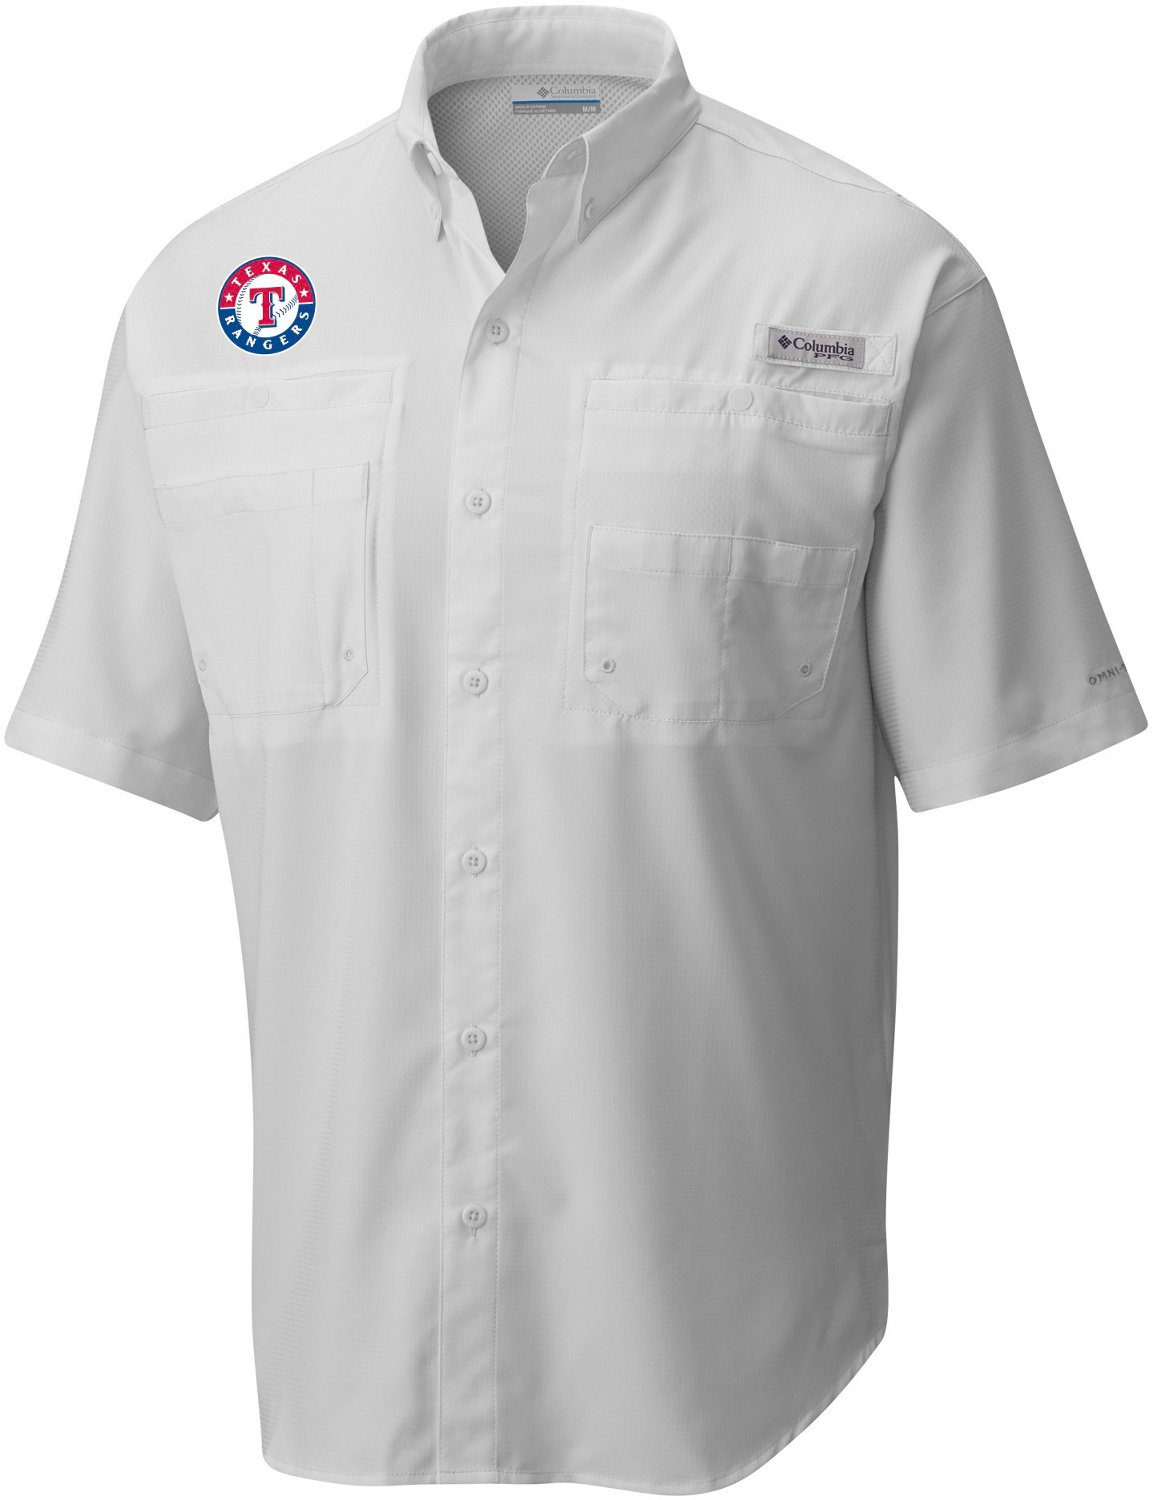 texas rangers men's shirts